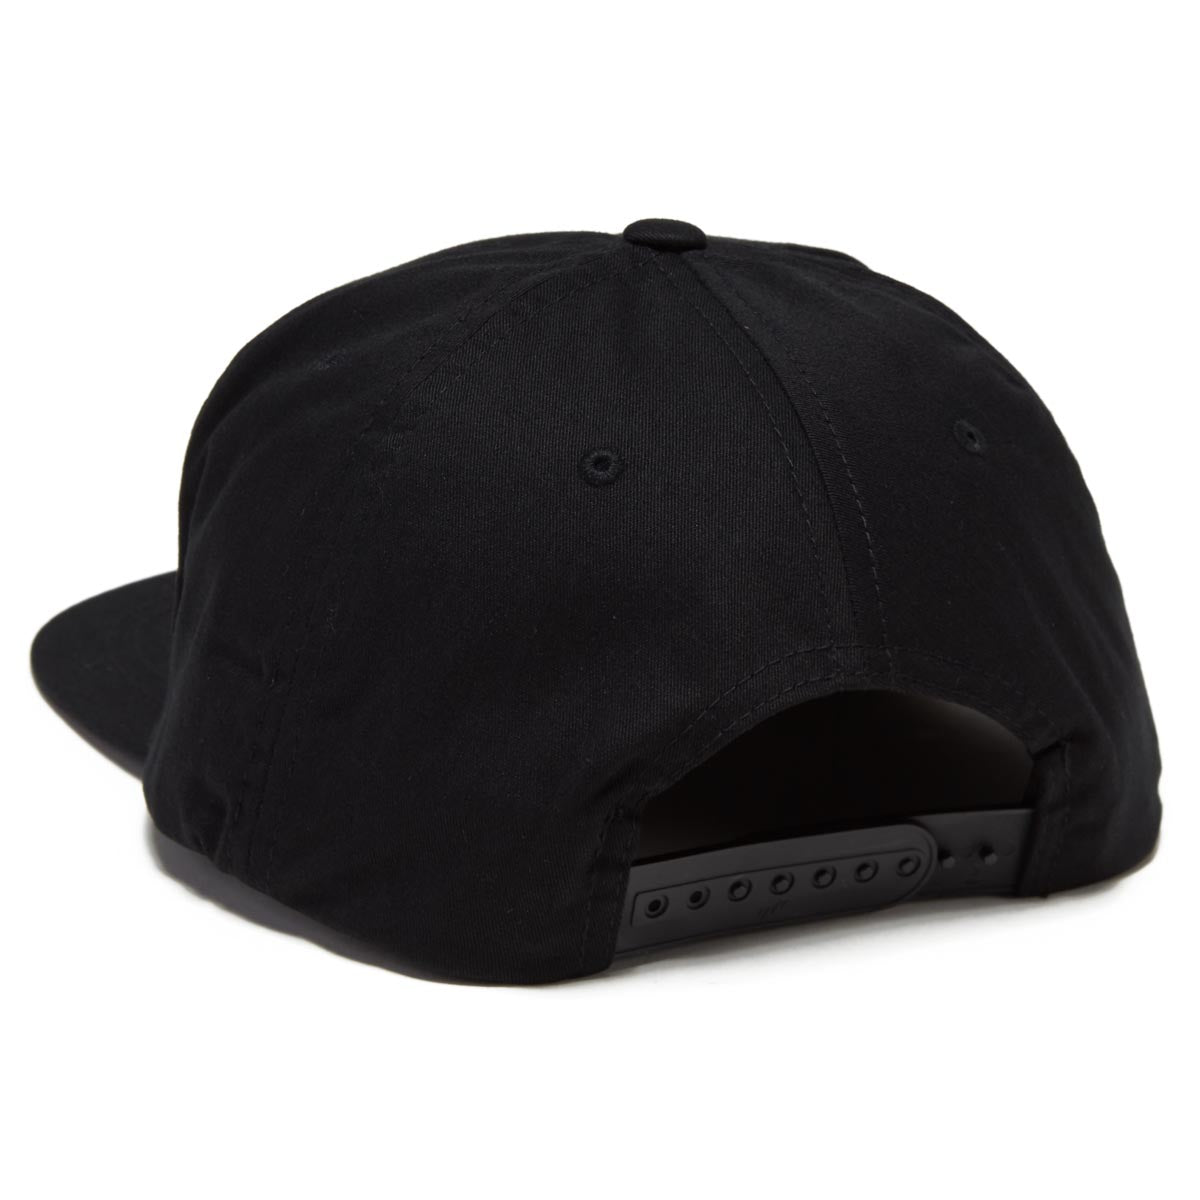 Diamond Supply Co. Outline Snapback Hat - Black image 2